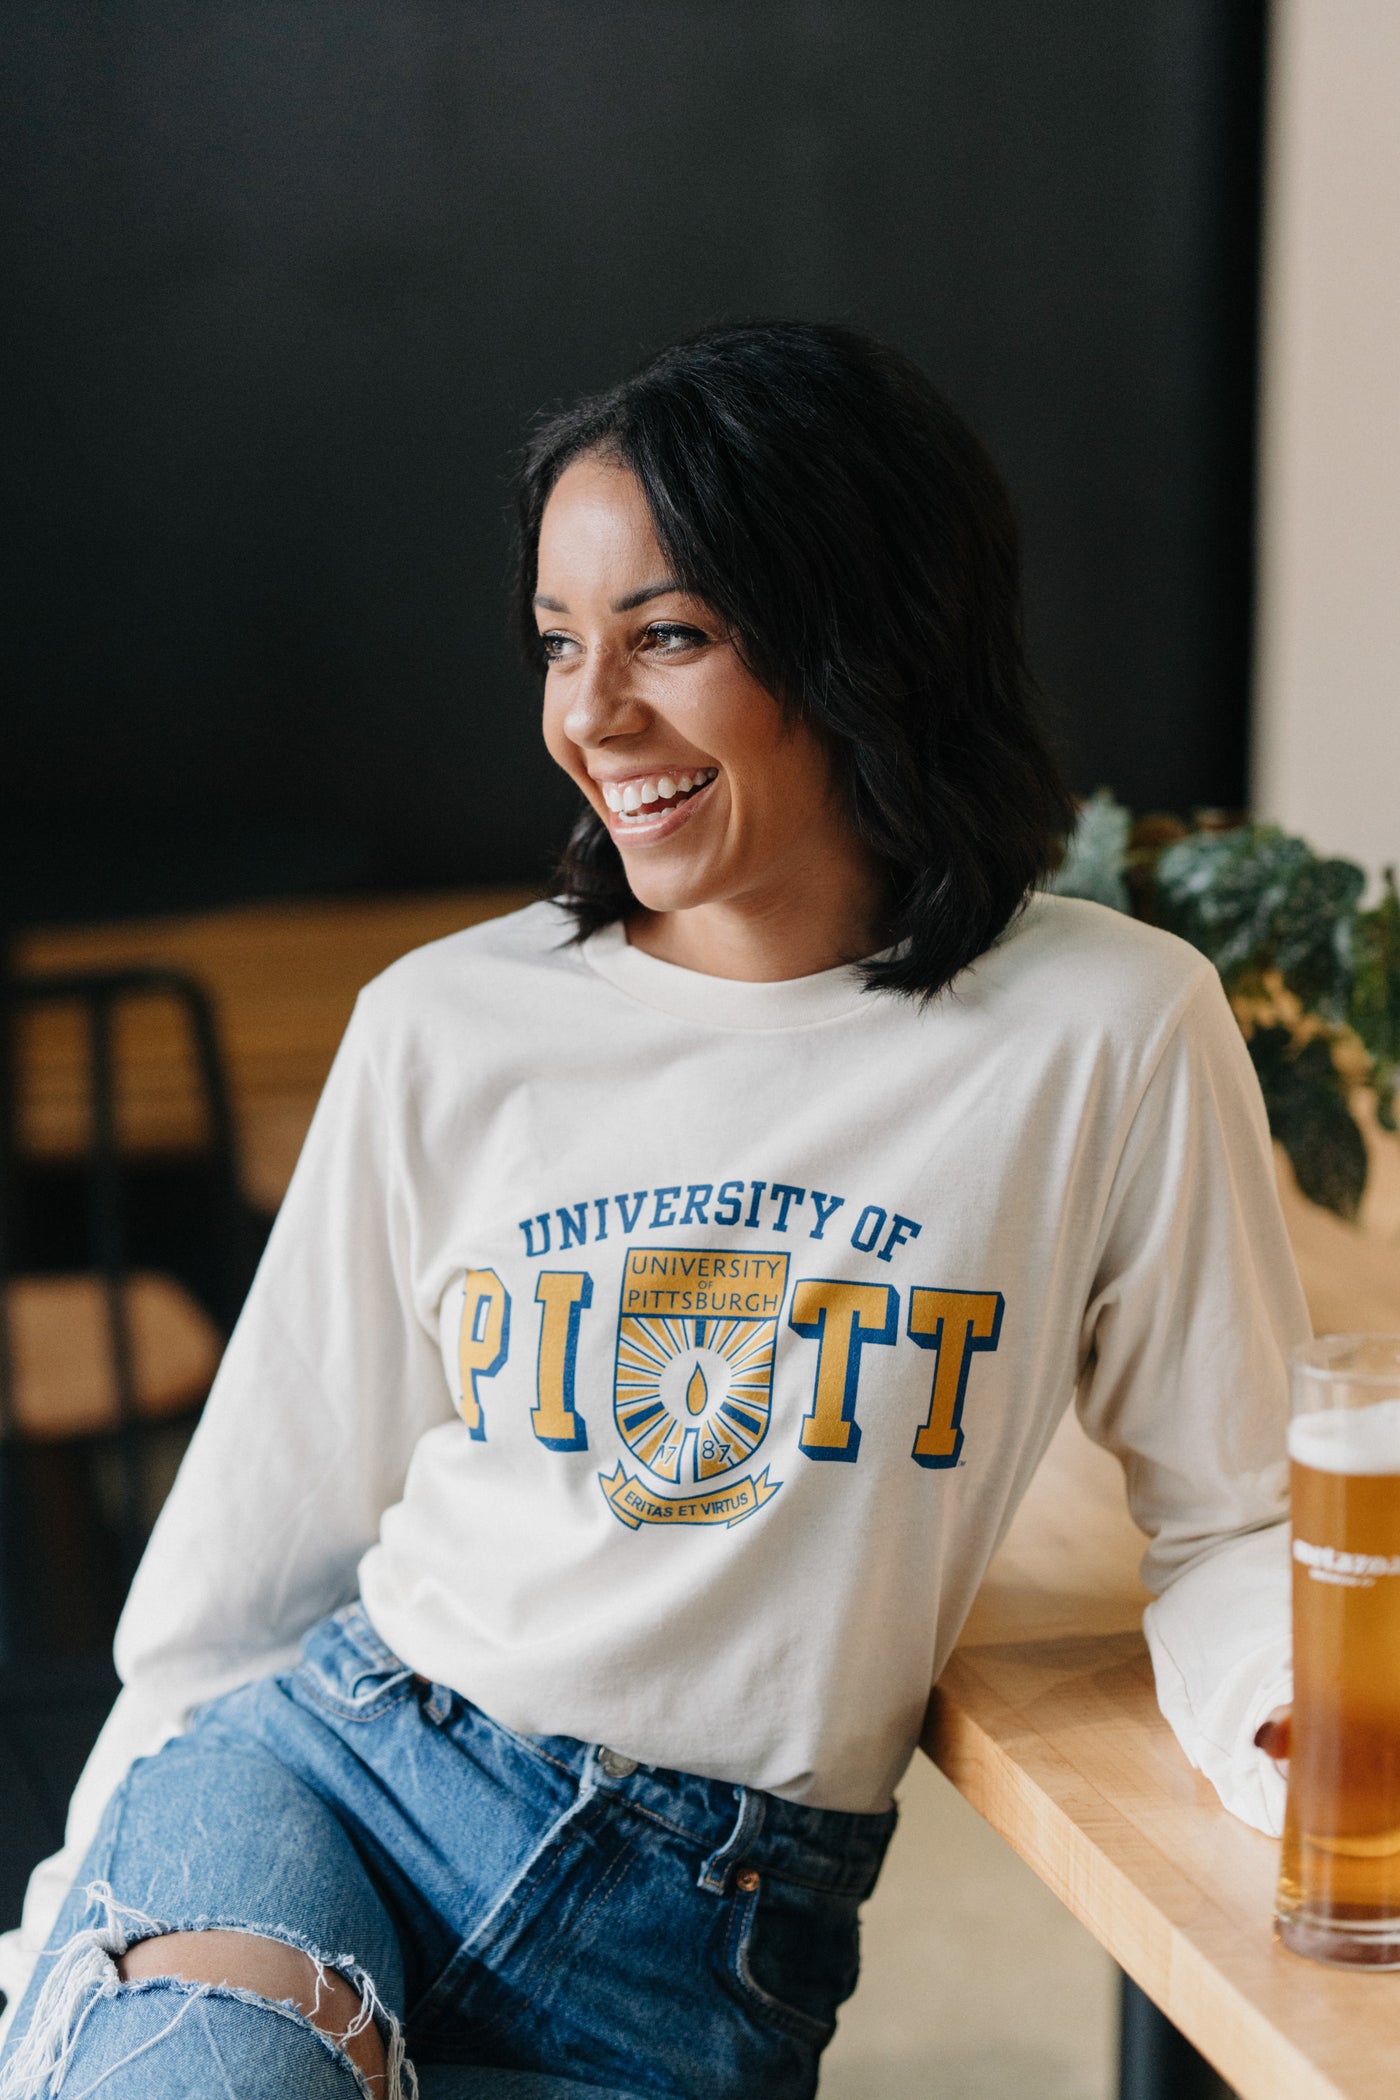 University of Pittsburgh Crest Long Sleeve